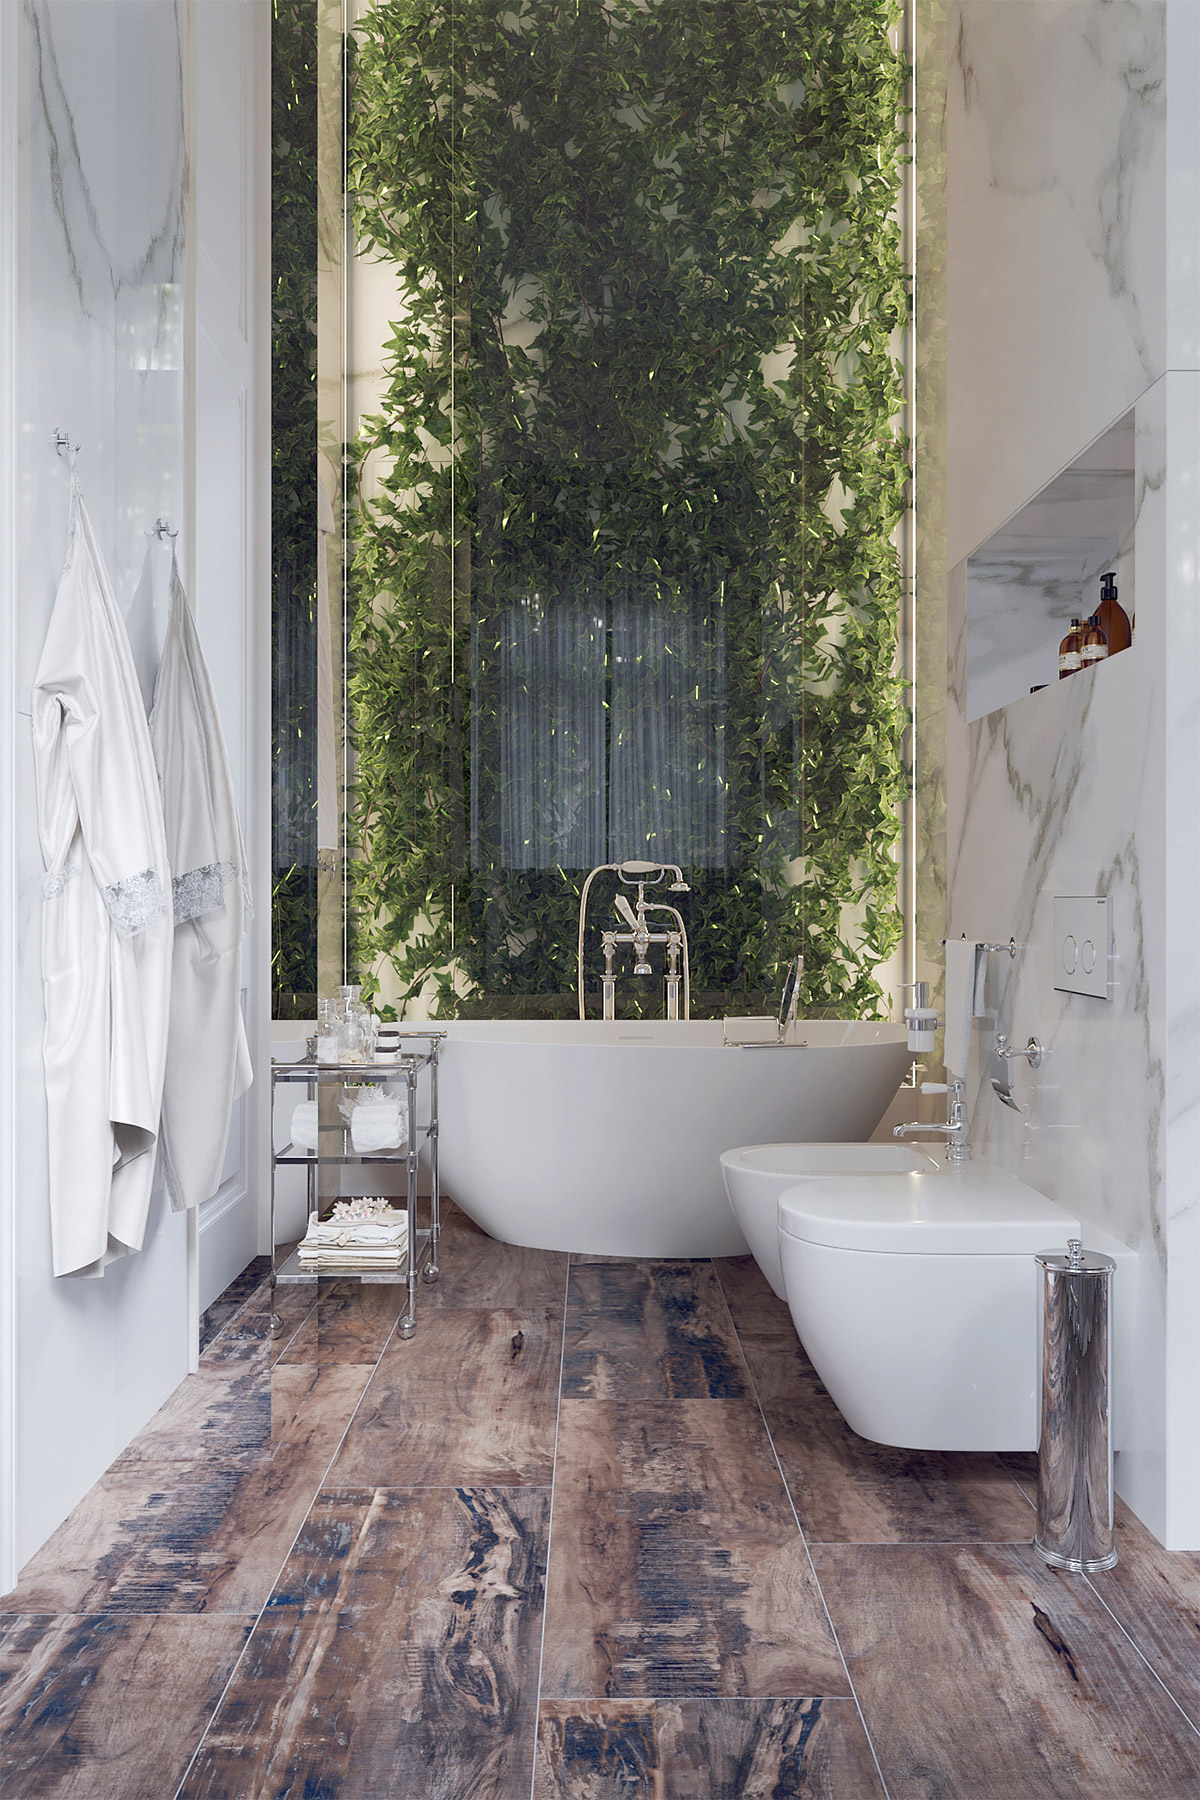 Small Luxury Bathrooms Ideas - Home Interior Design